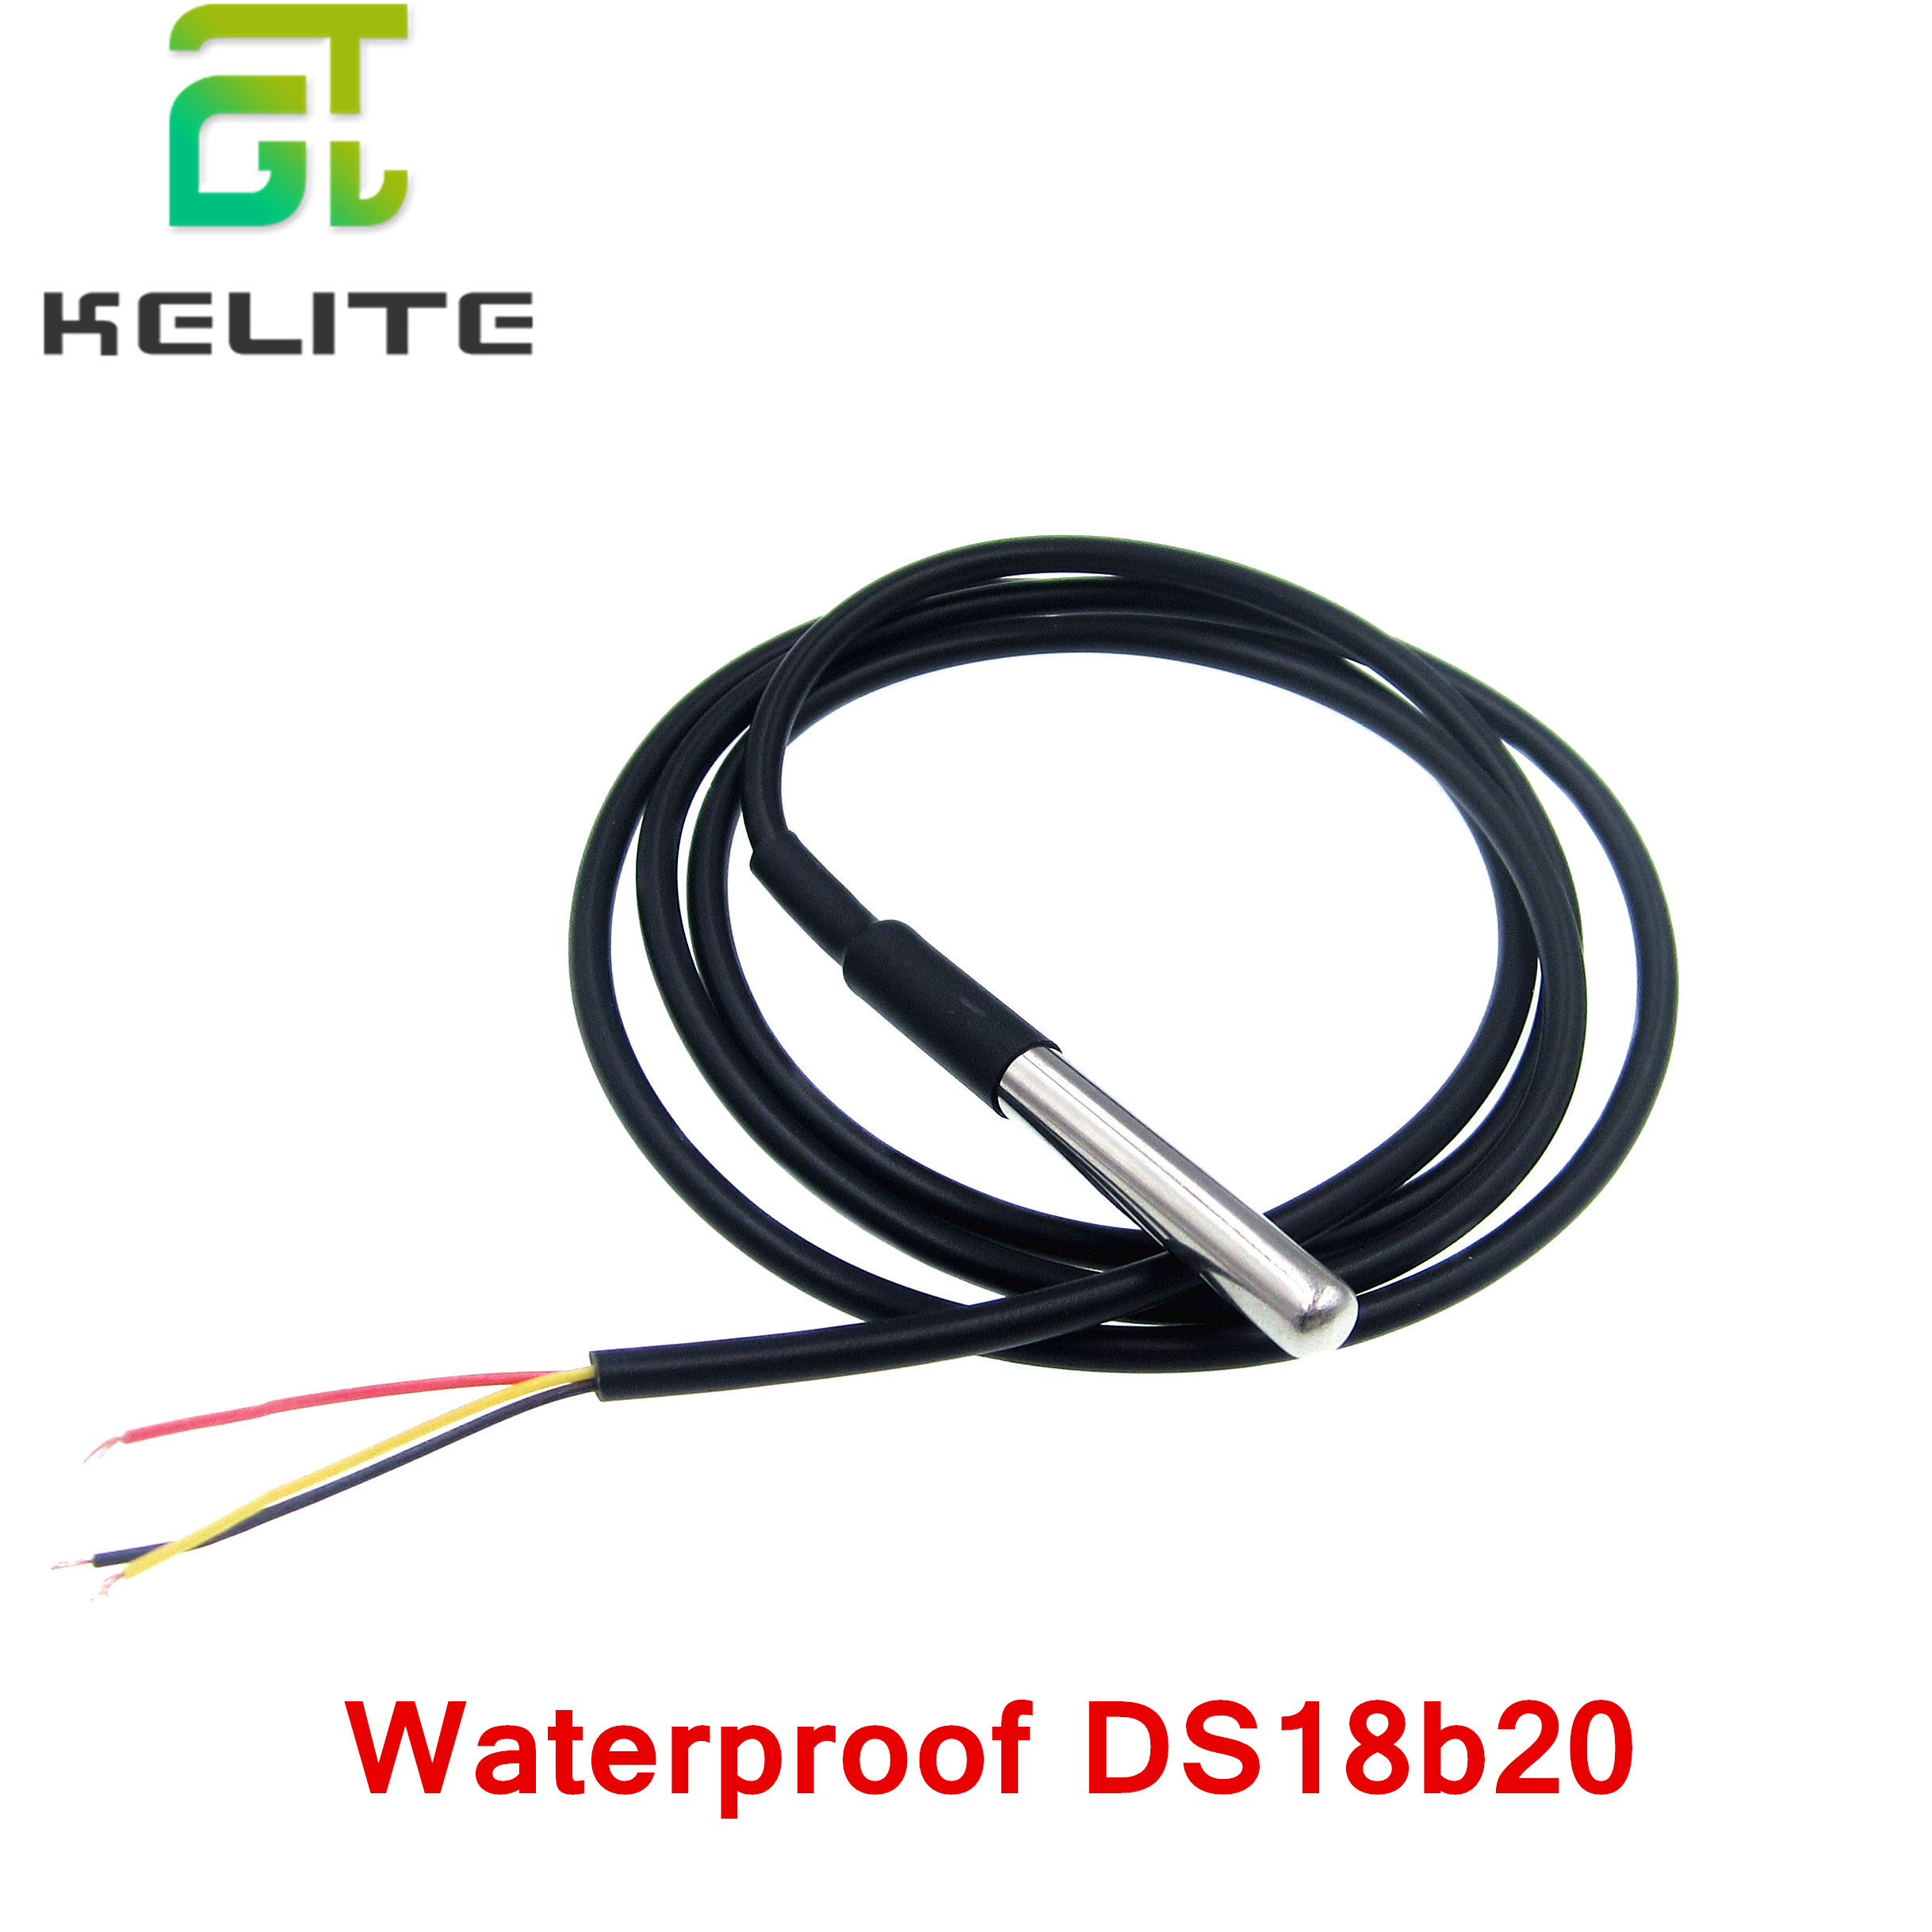 DS18B20 Waterproof Digital Temperature Sensor Probe 2 Meter